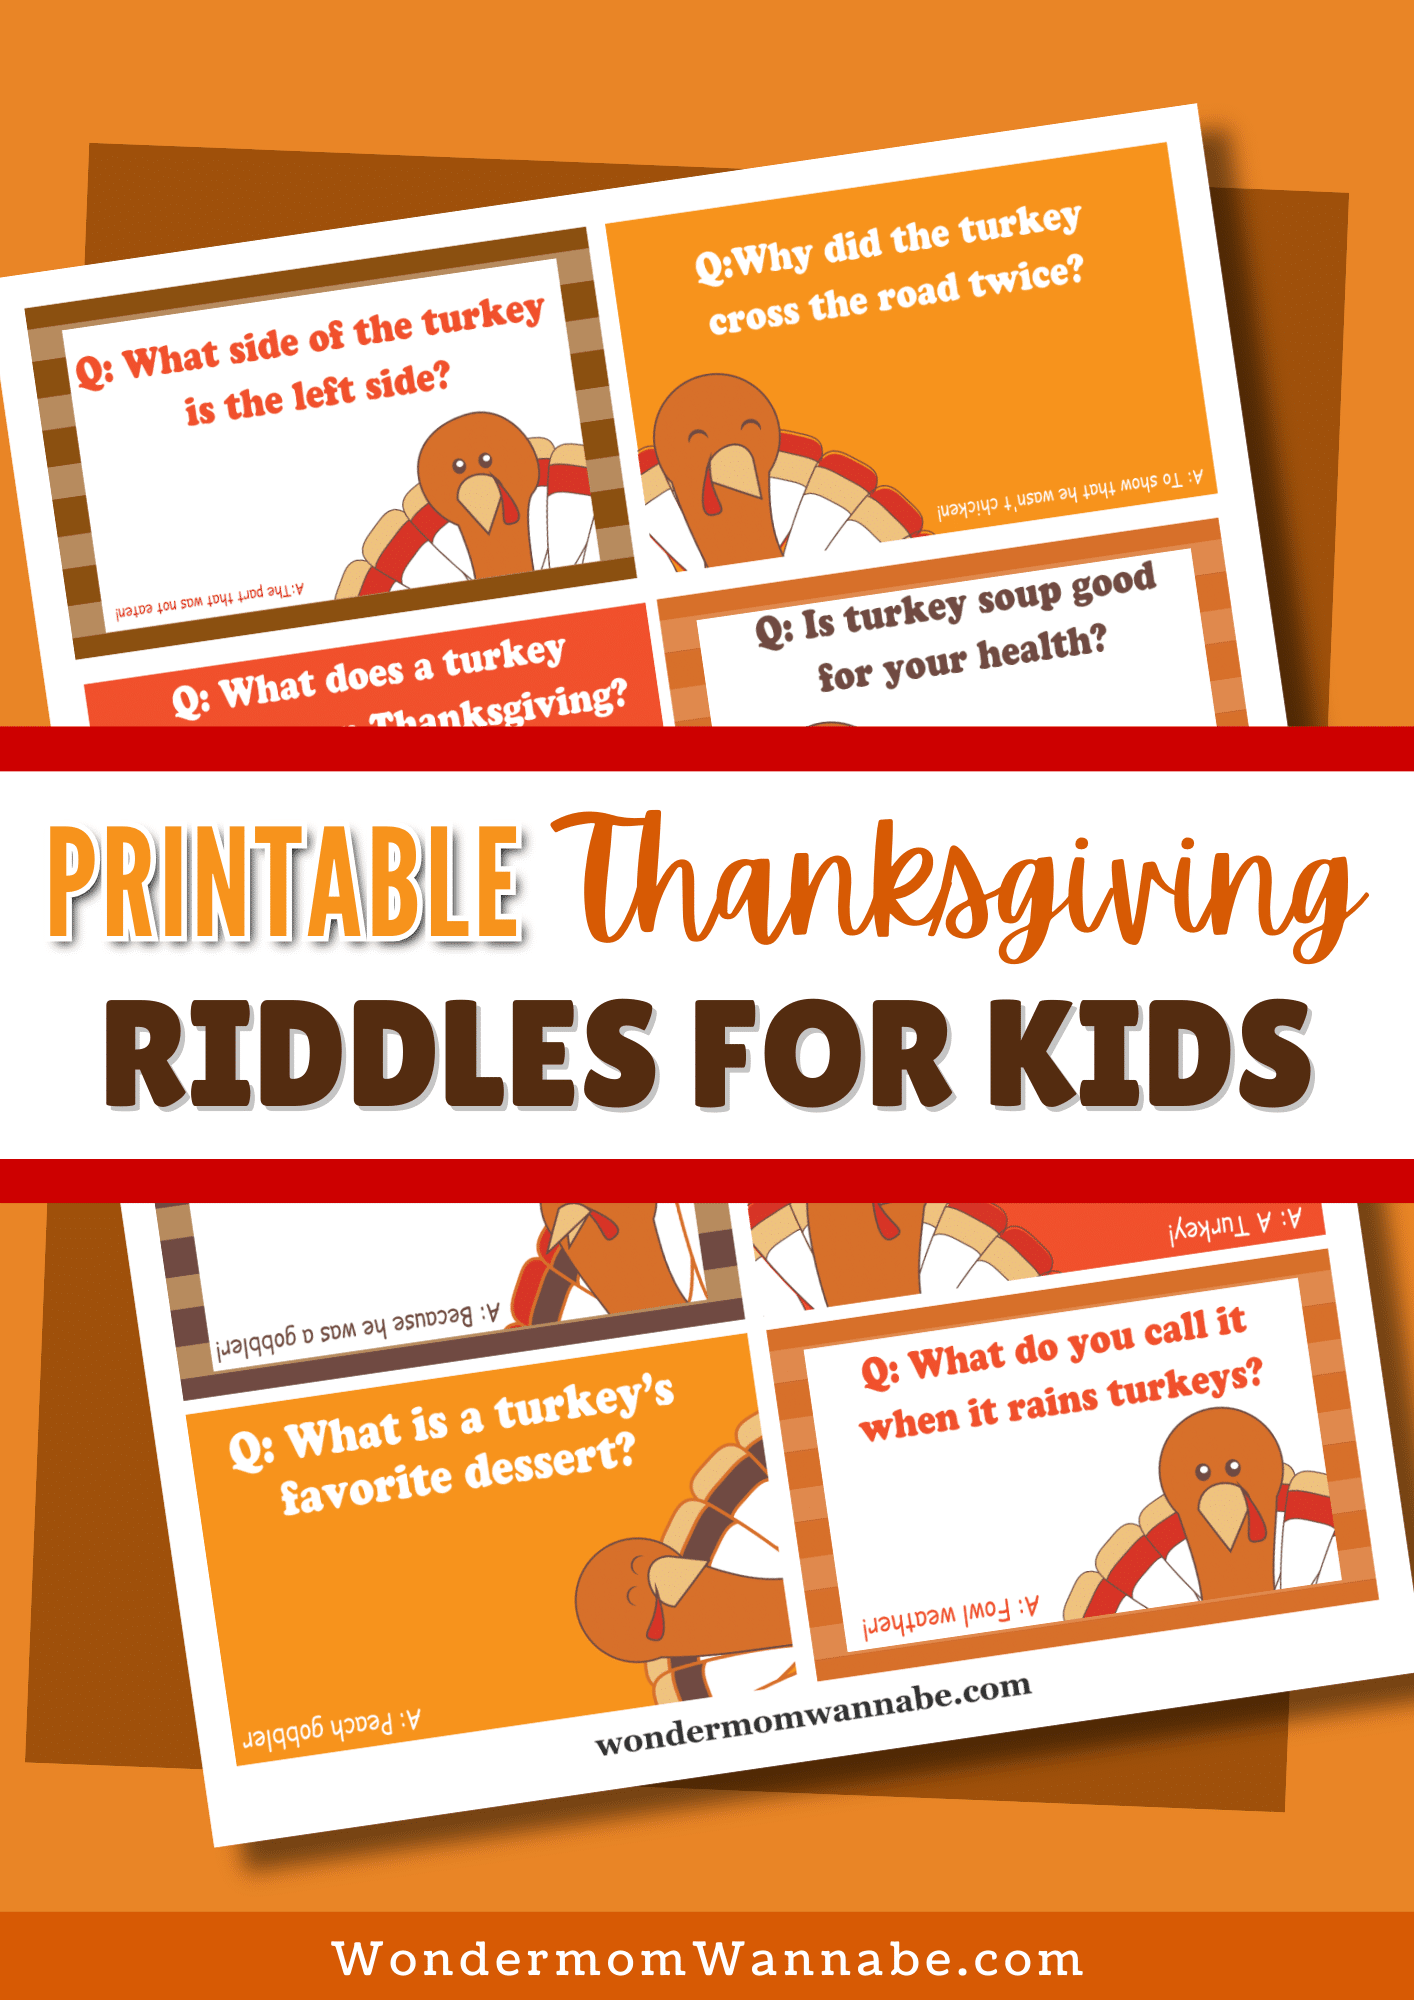 Printable Thanksgiving riddles for kids.